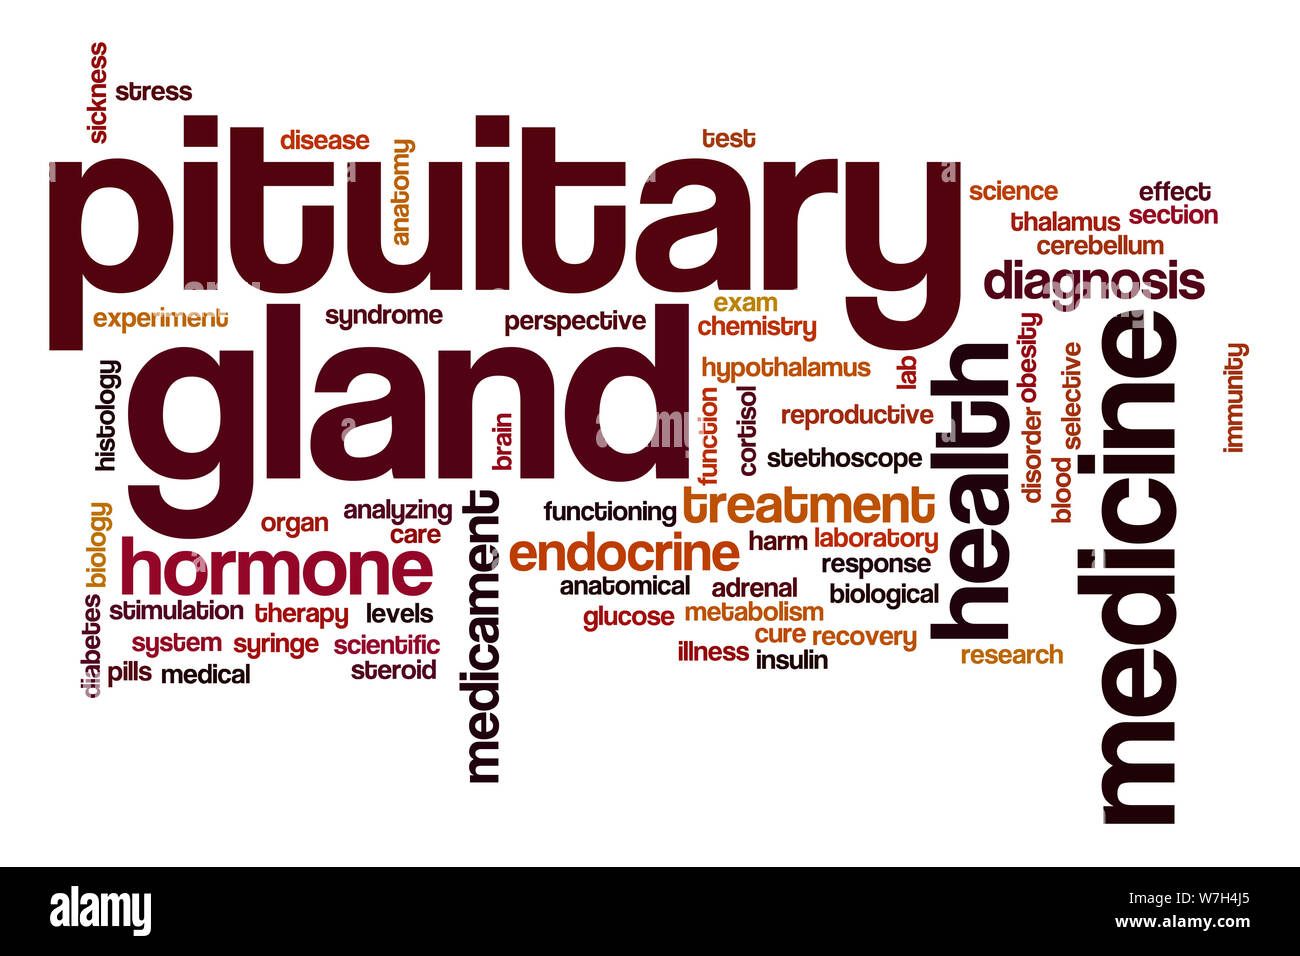 Pituitary gland word cloud Stock Photo